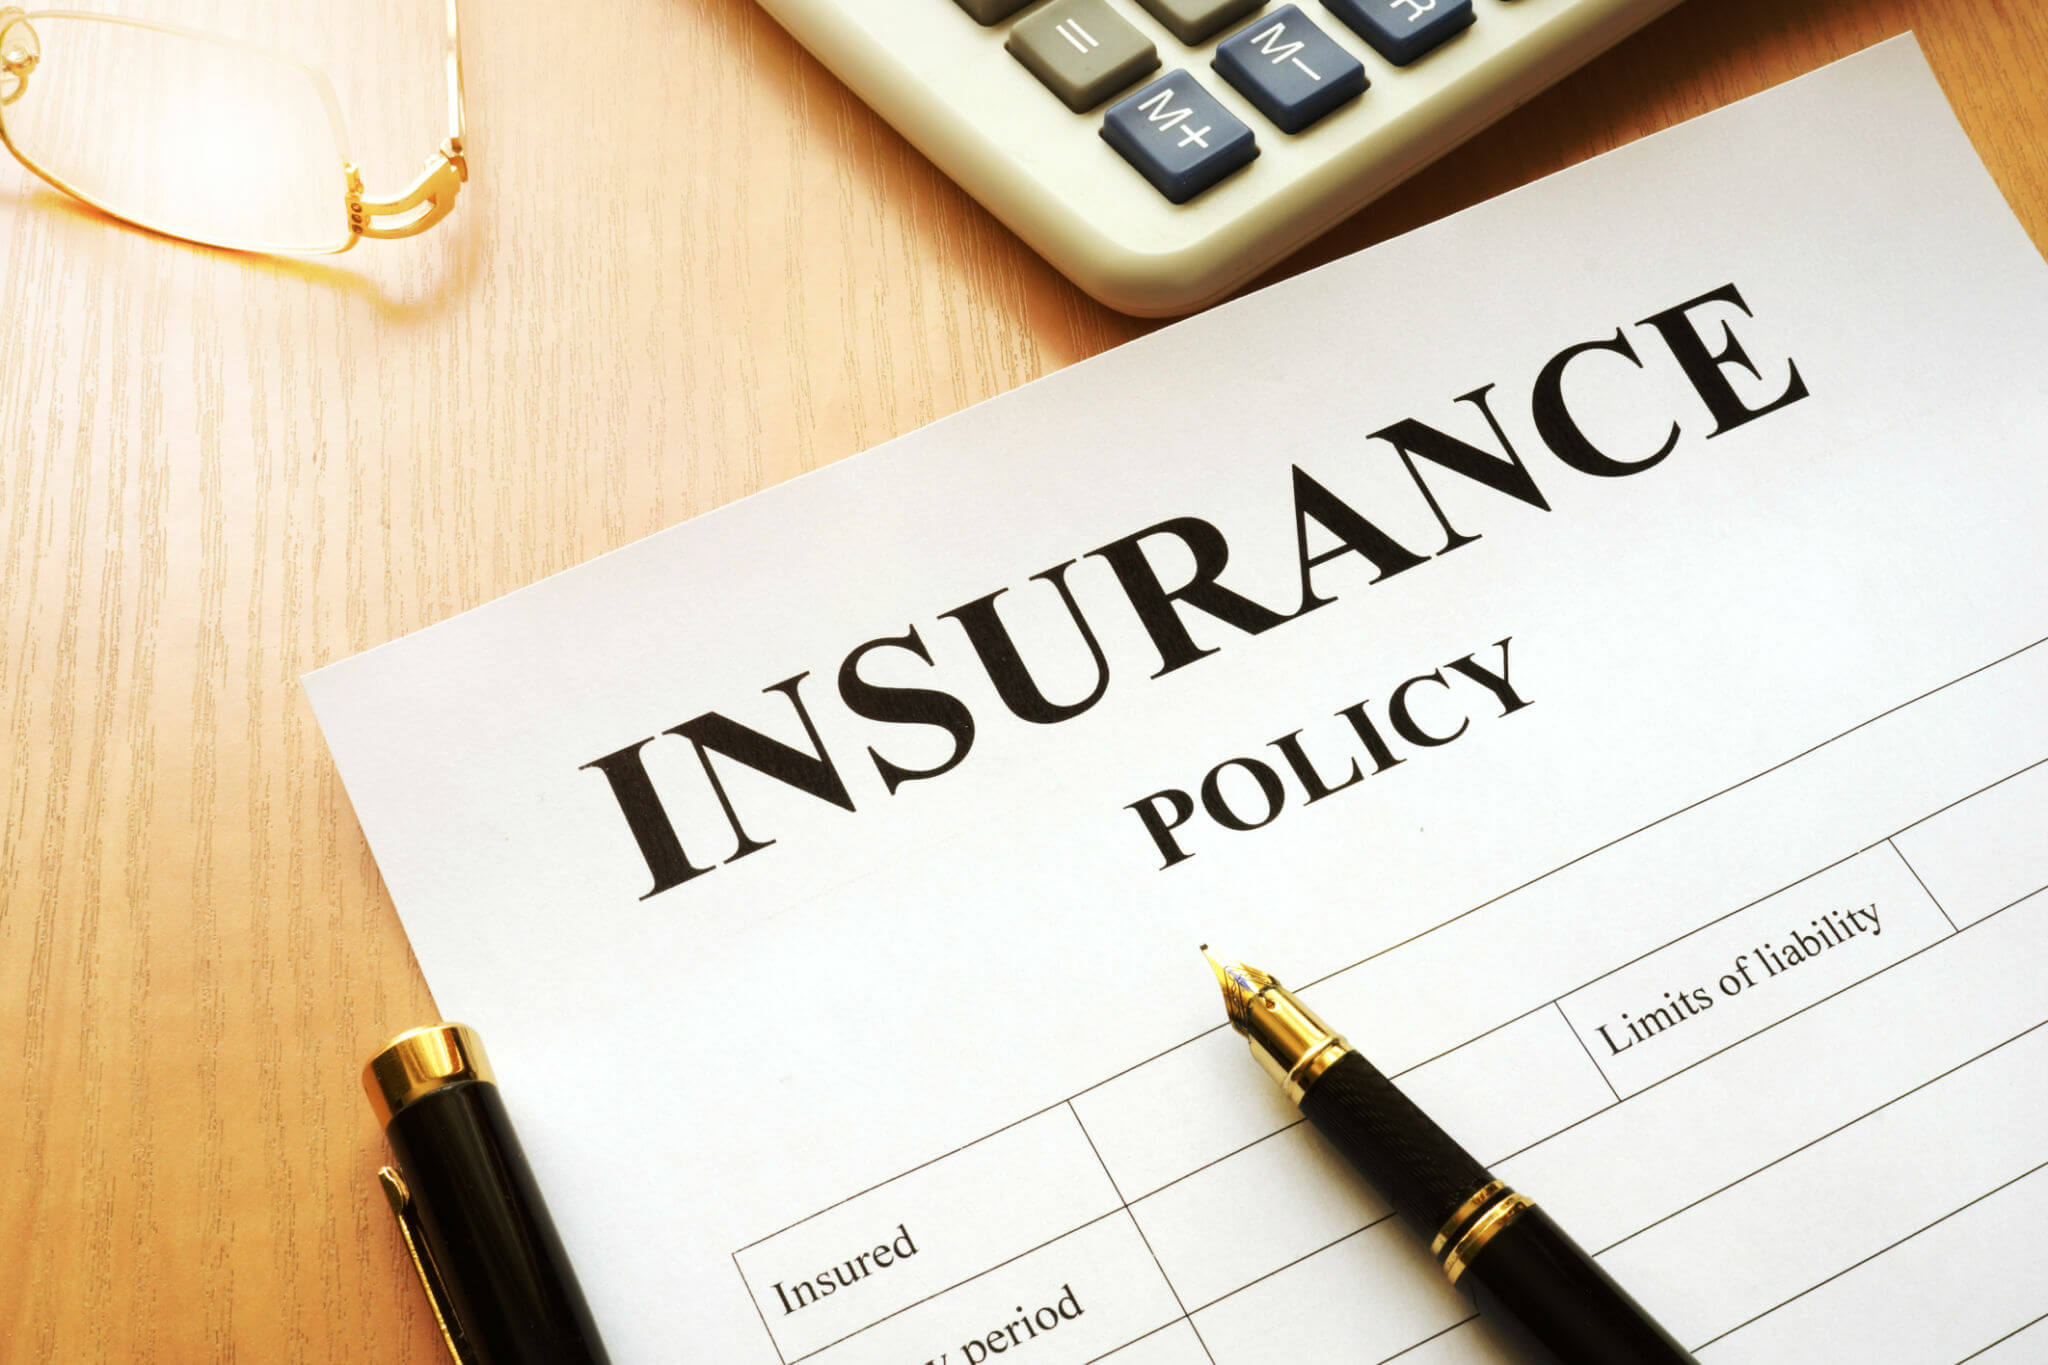 insurance policies